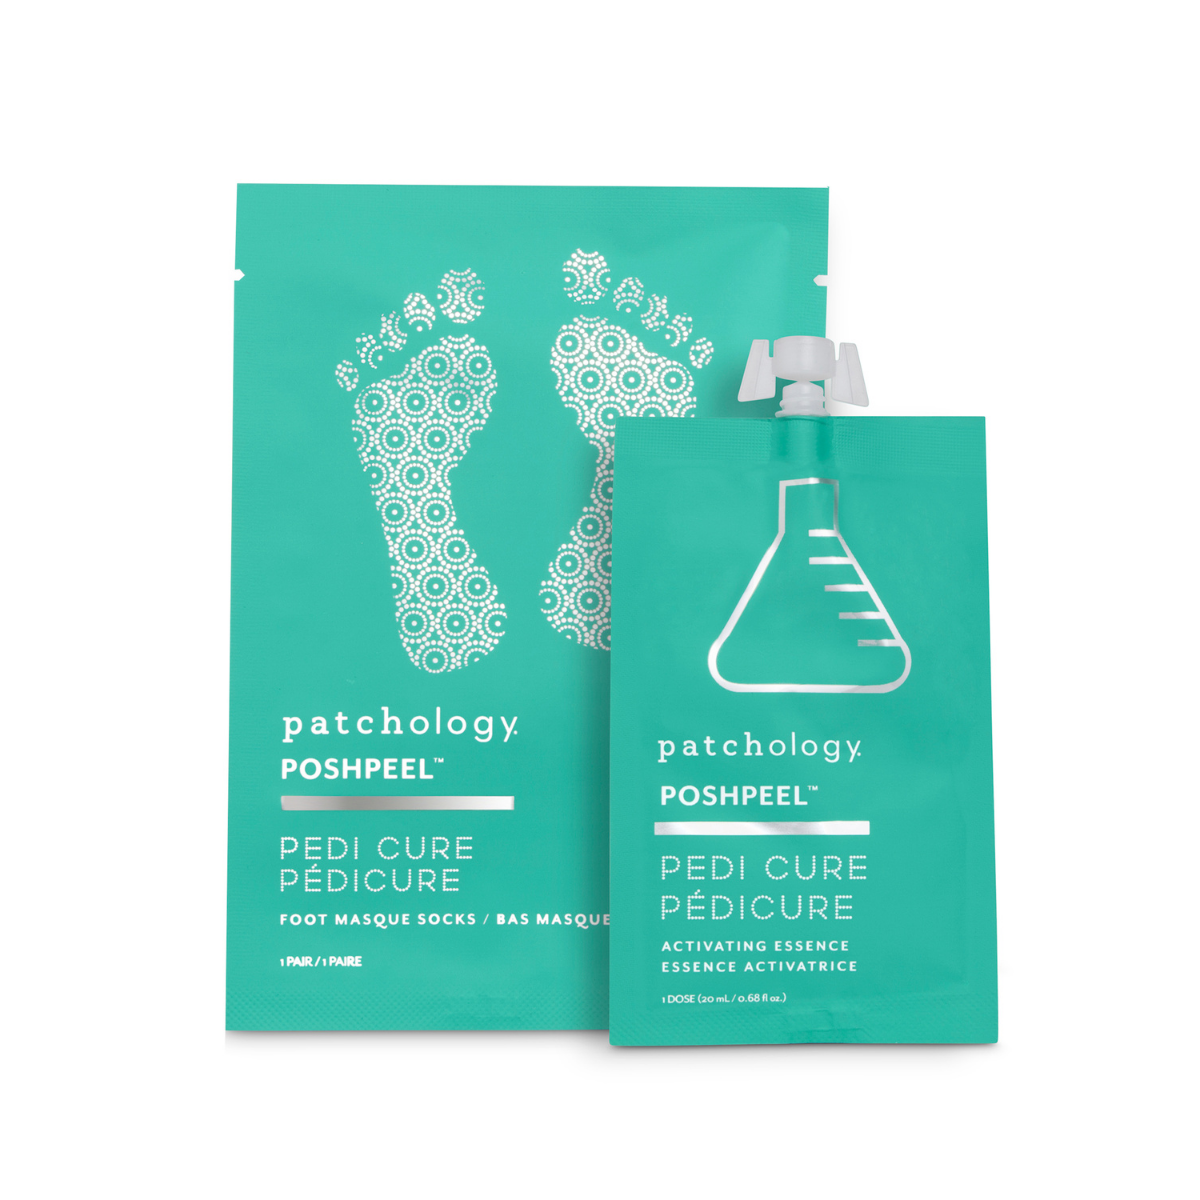 Patchology Posh Peel PediCure - 1 Treatment/Box